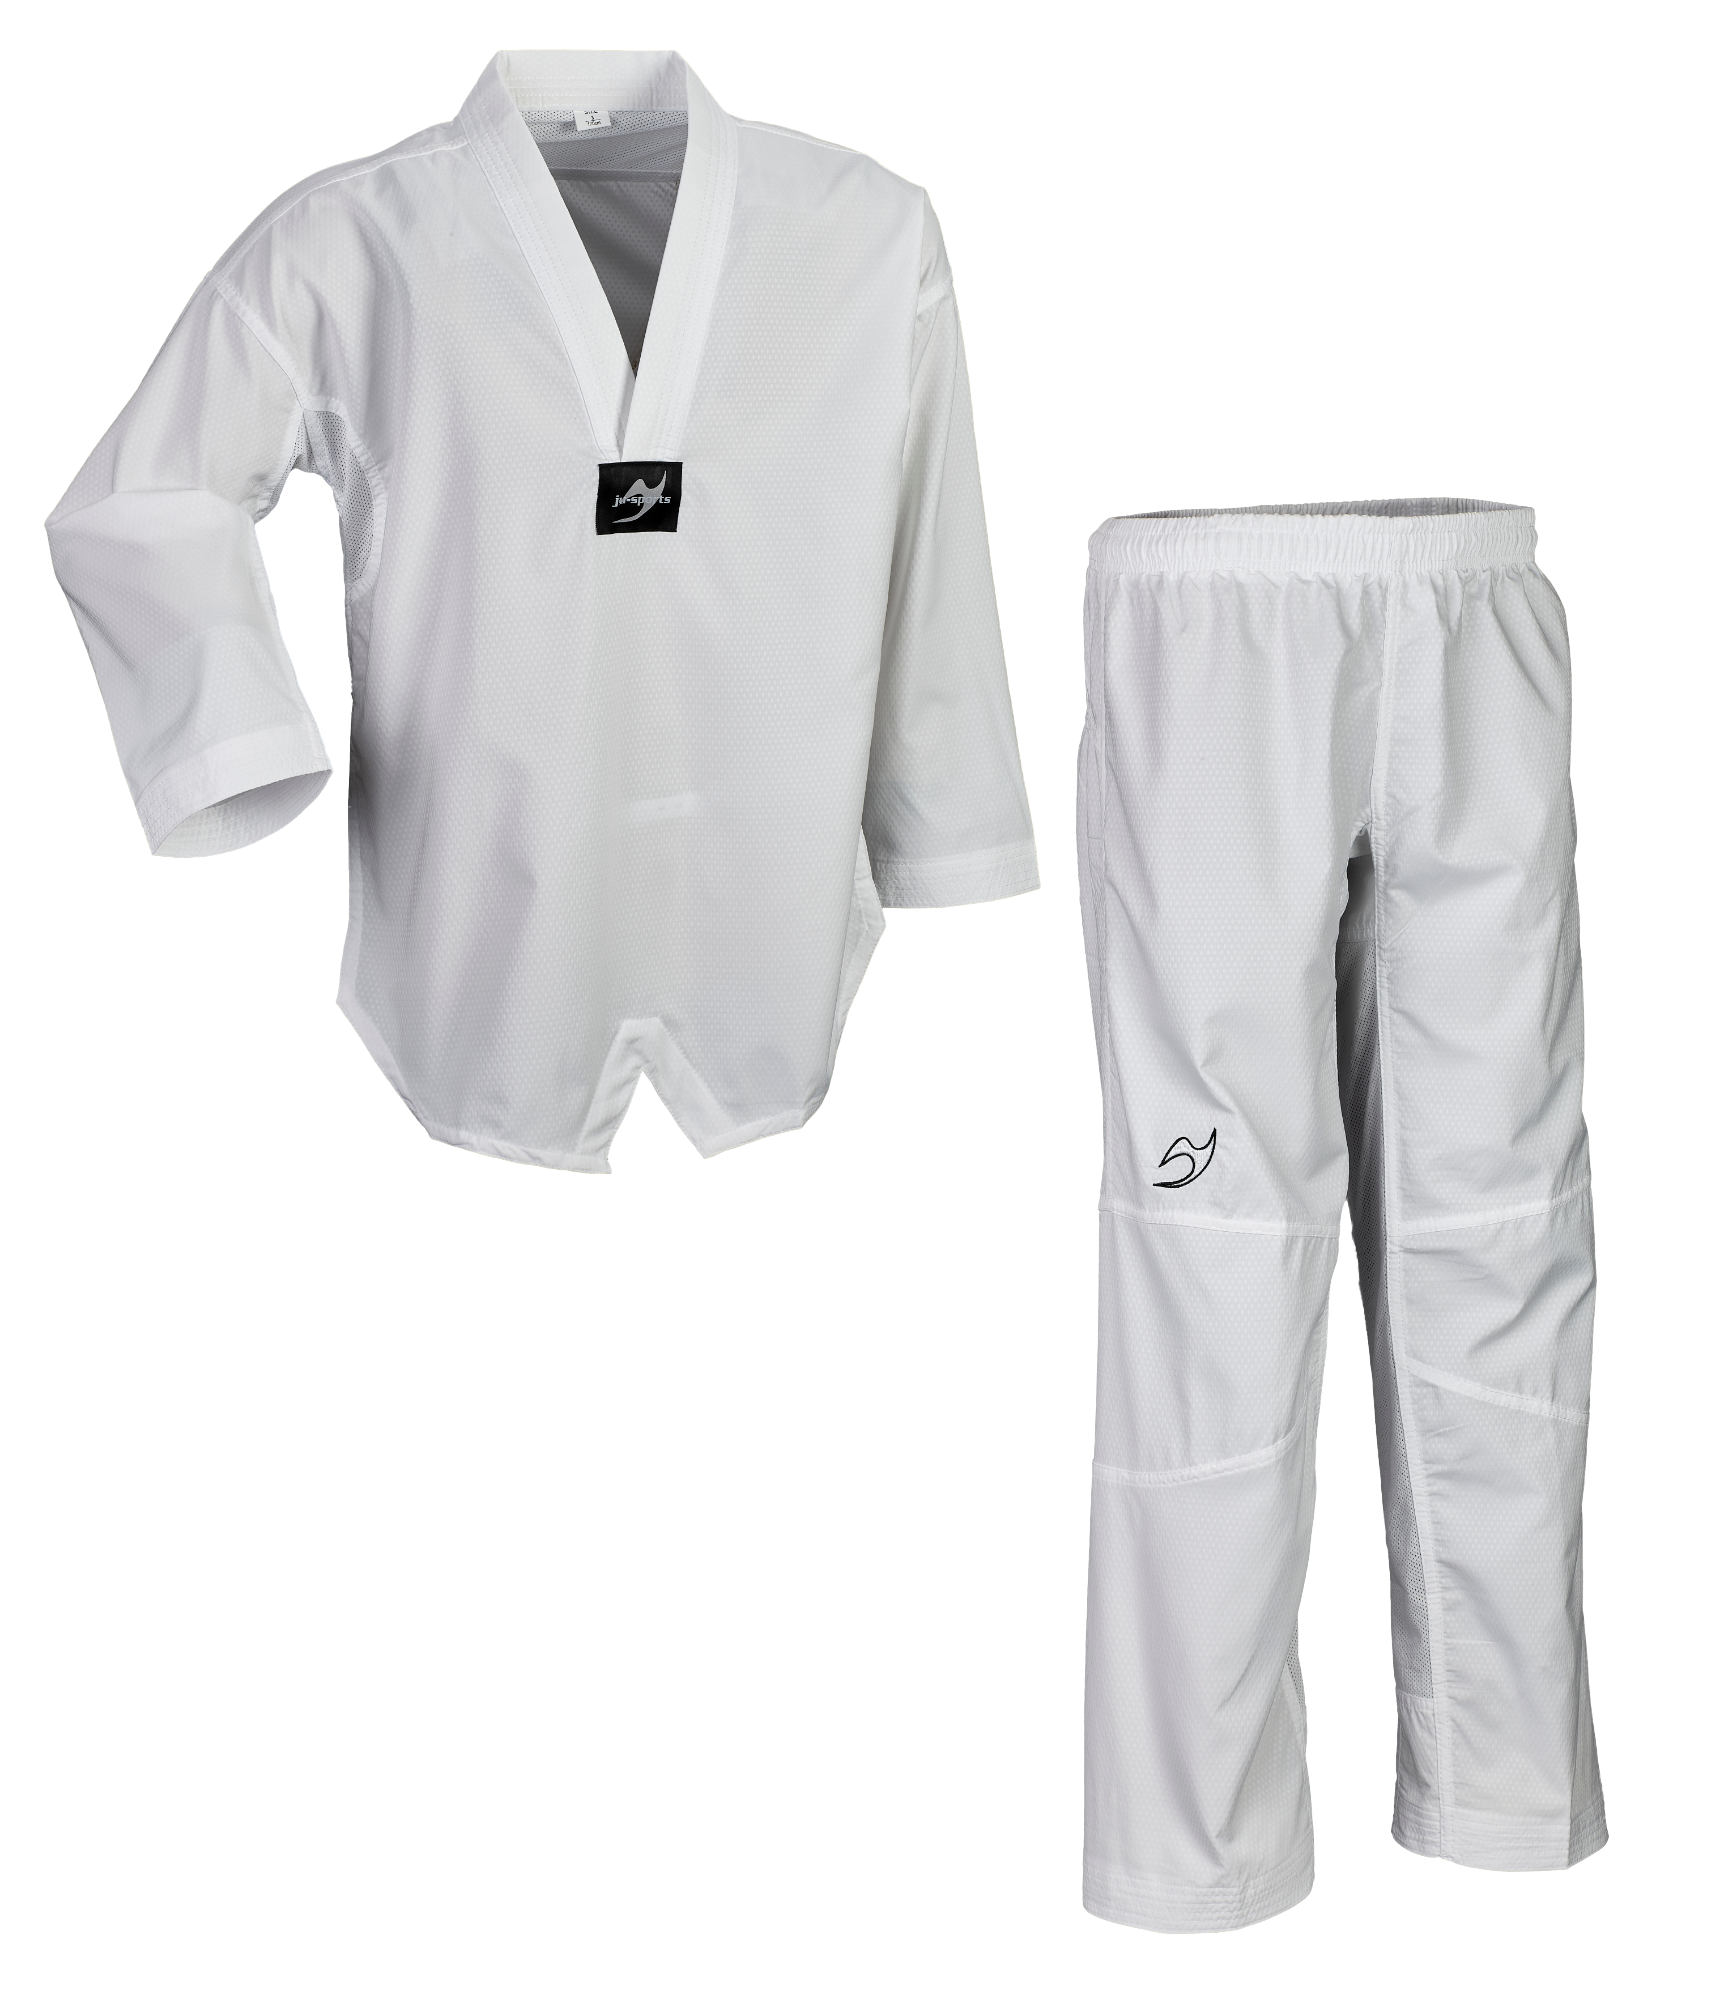 Taekwondo-Anzug student pro weißes Revers